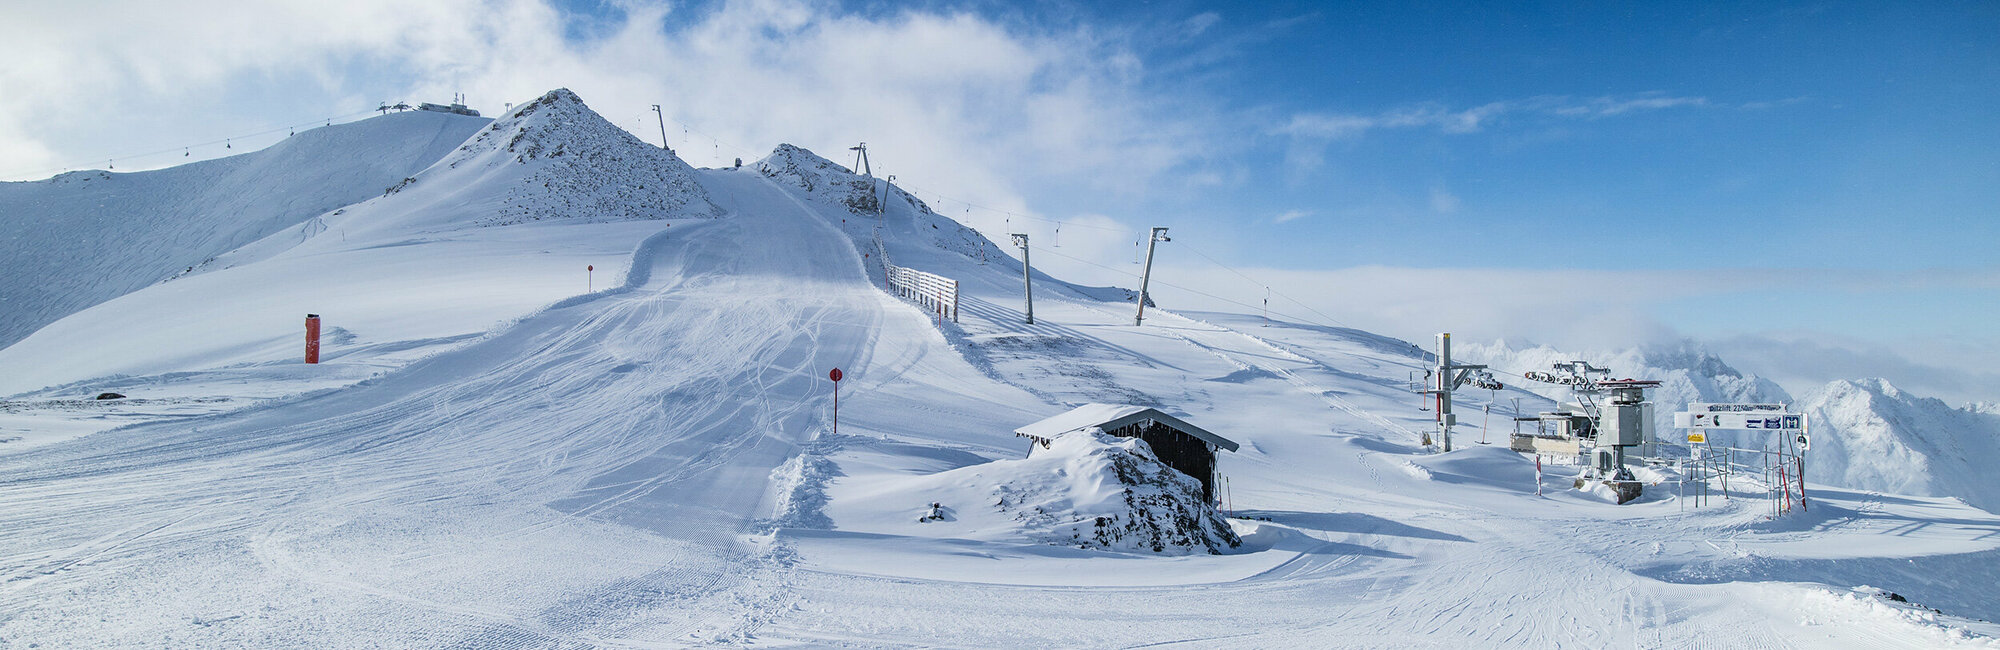 Silvretta Ski-Arena Ischgl